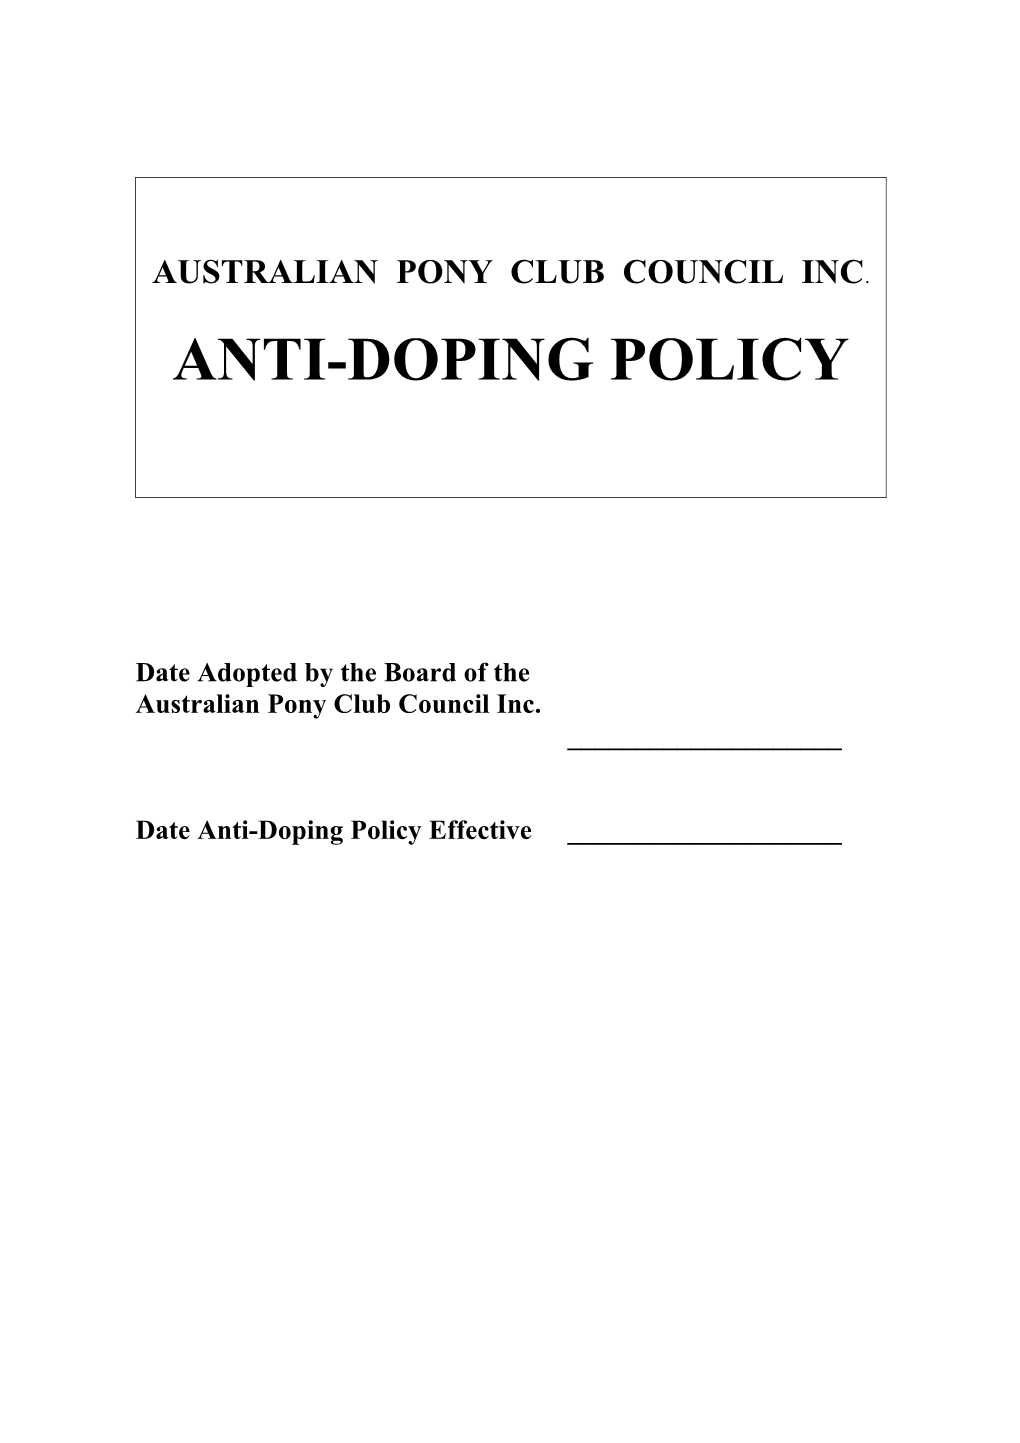 Asc Model Anti-Doping Template